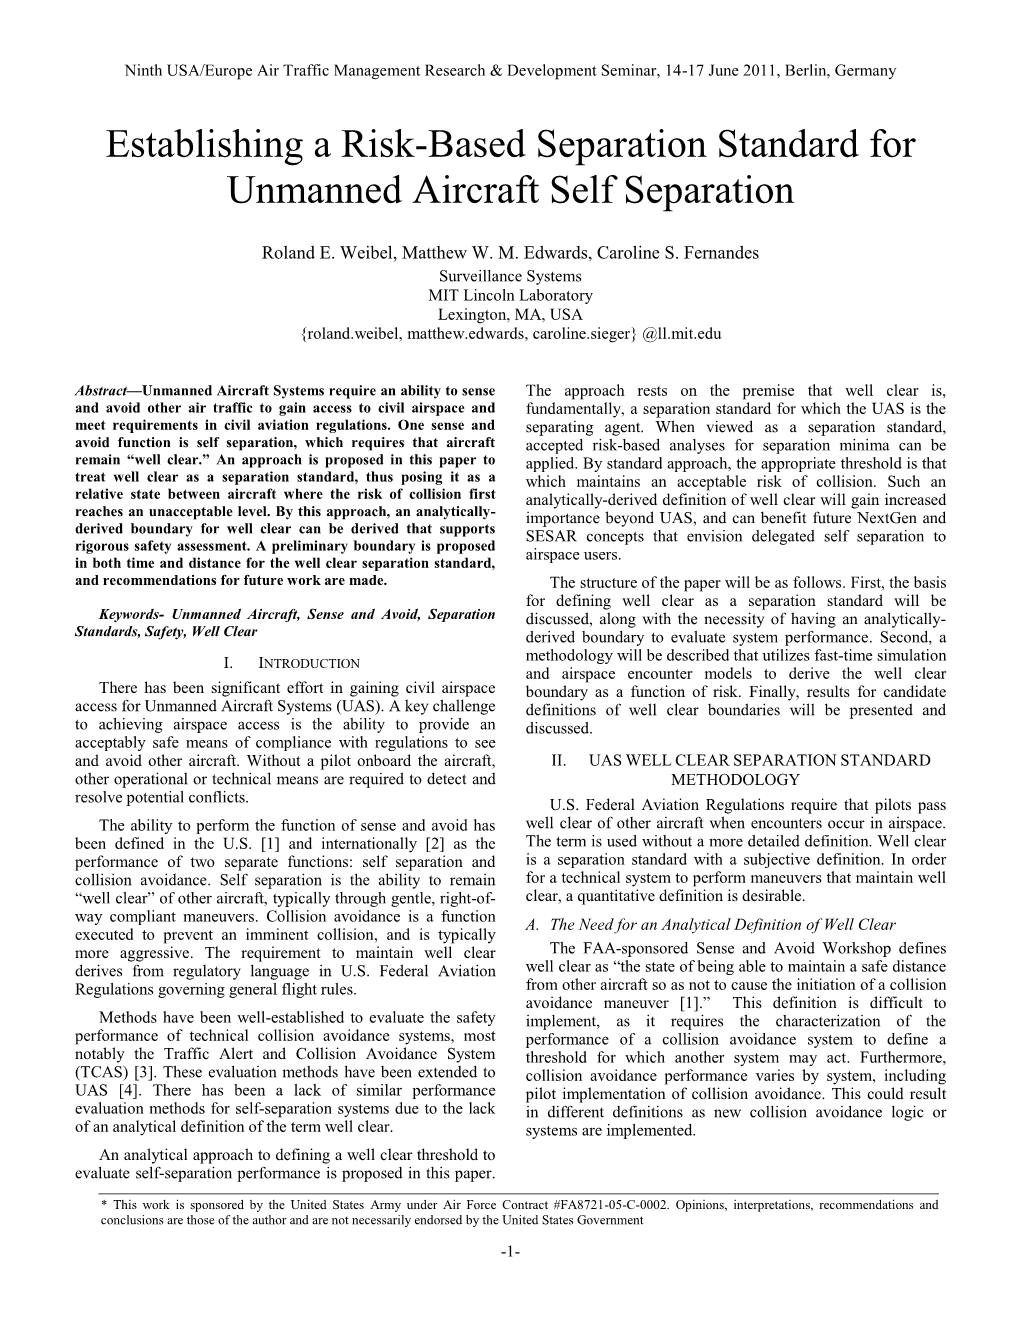 Establishing a Risk-Based Separation Standard for Unmanned Aircraft Self Separation